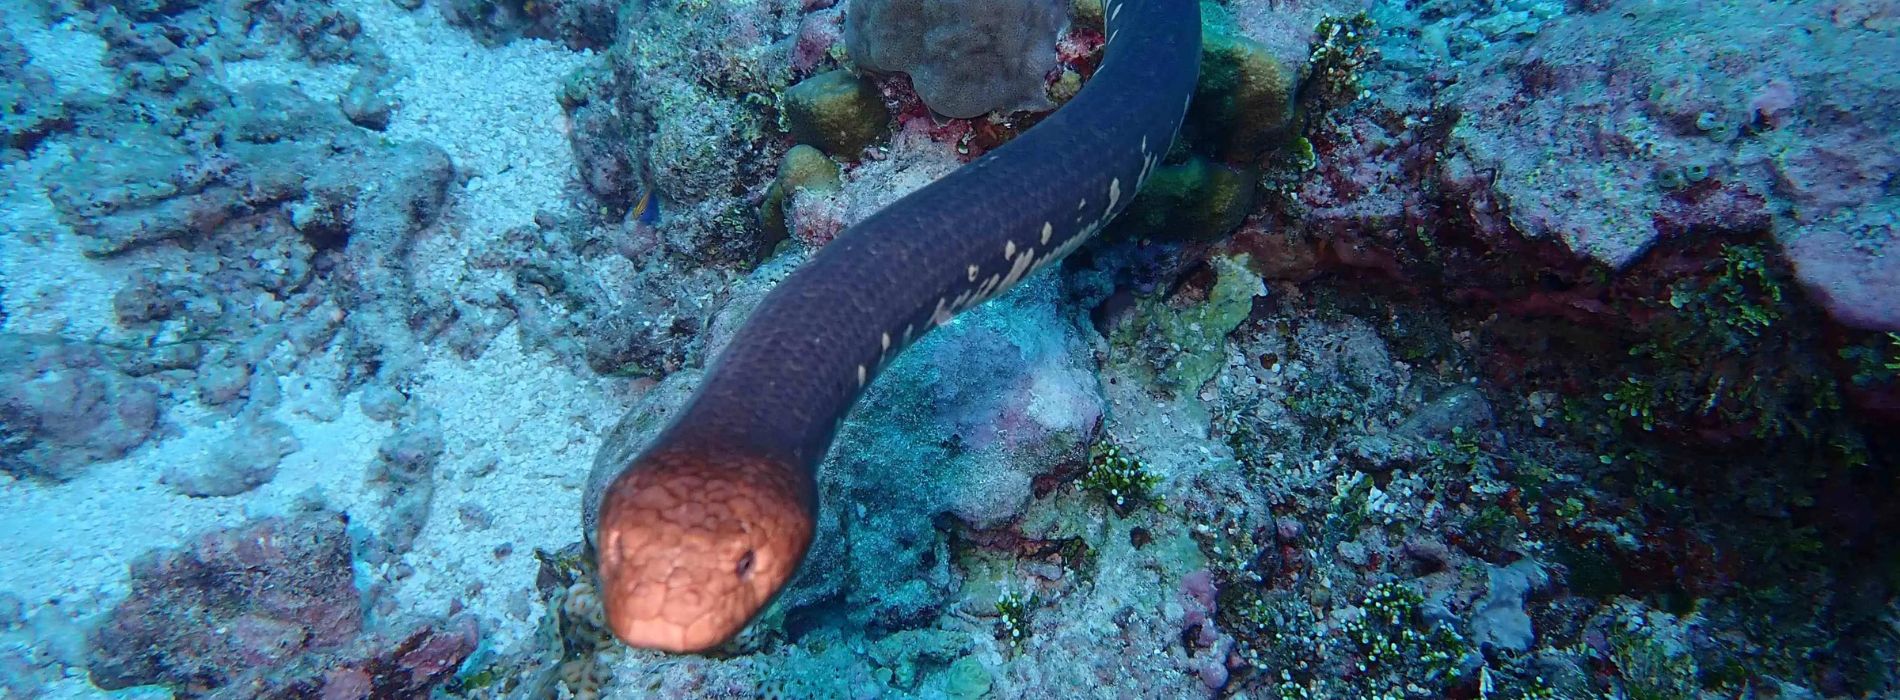 sea-snake-hiding-in-coral-reefs